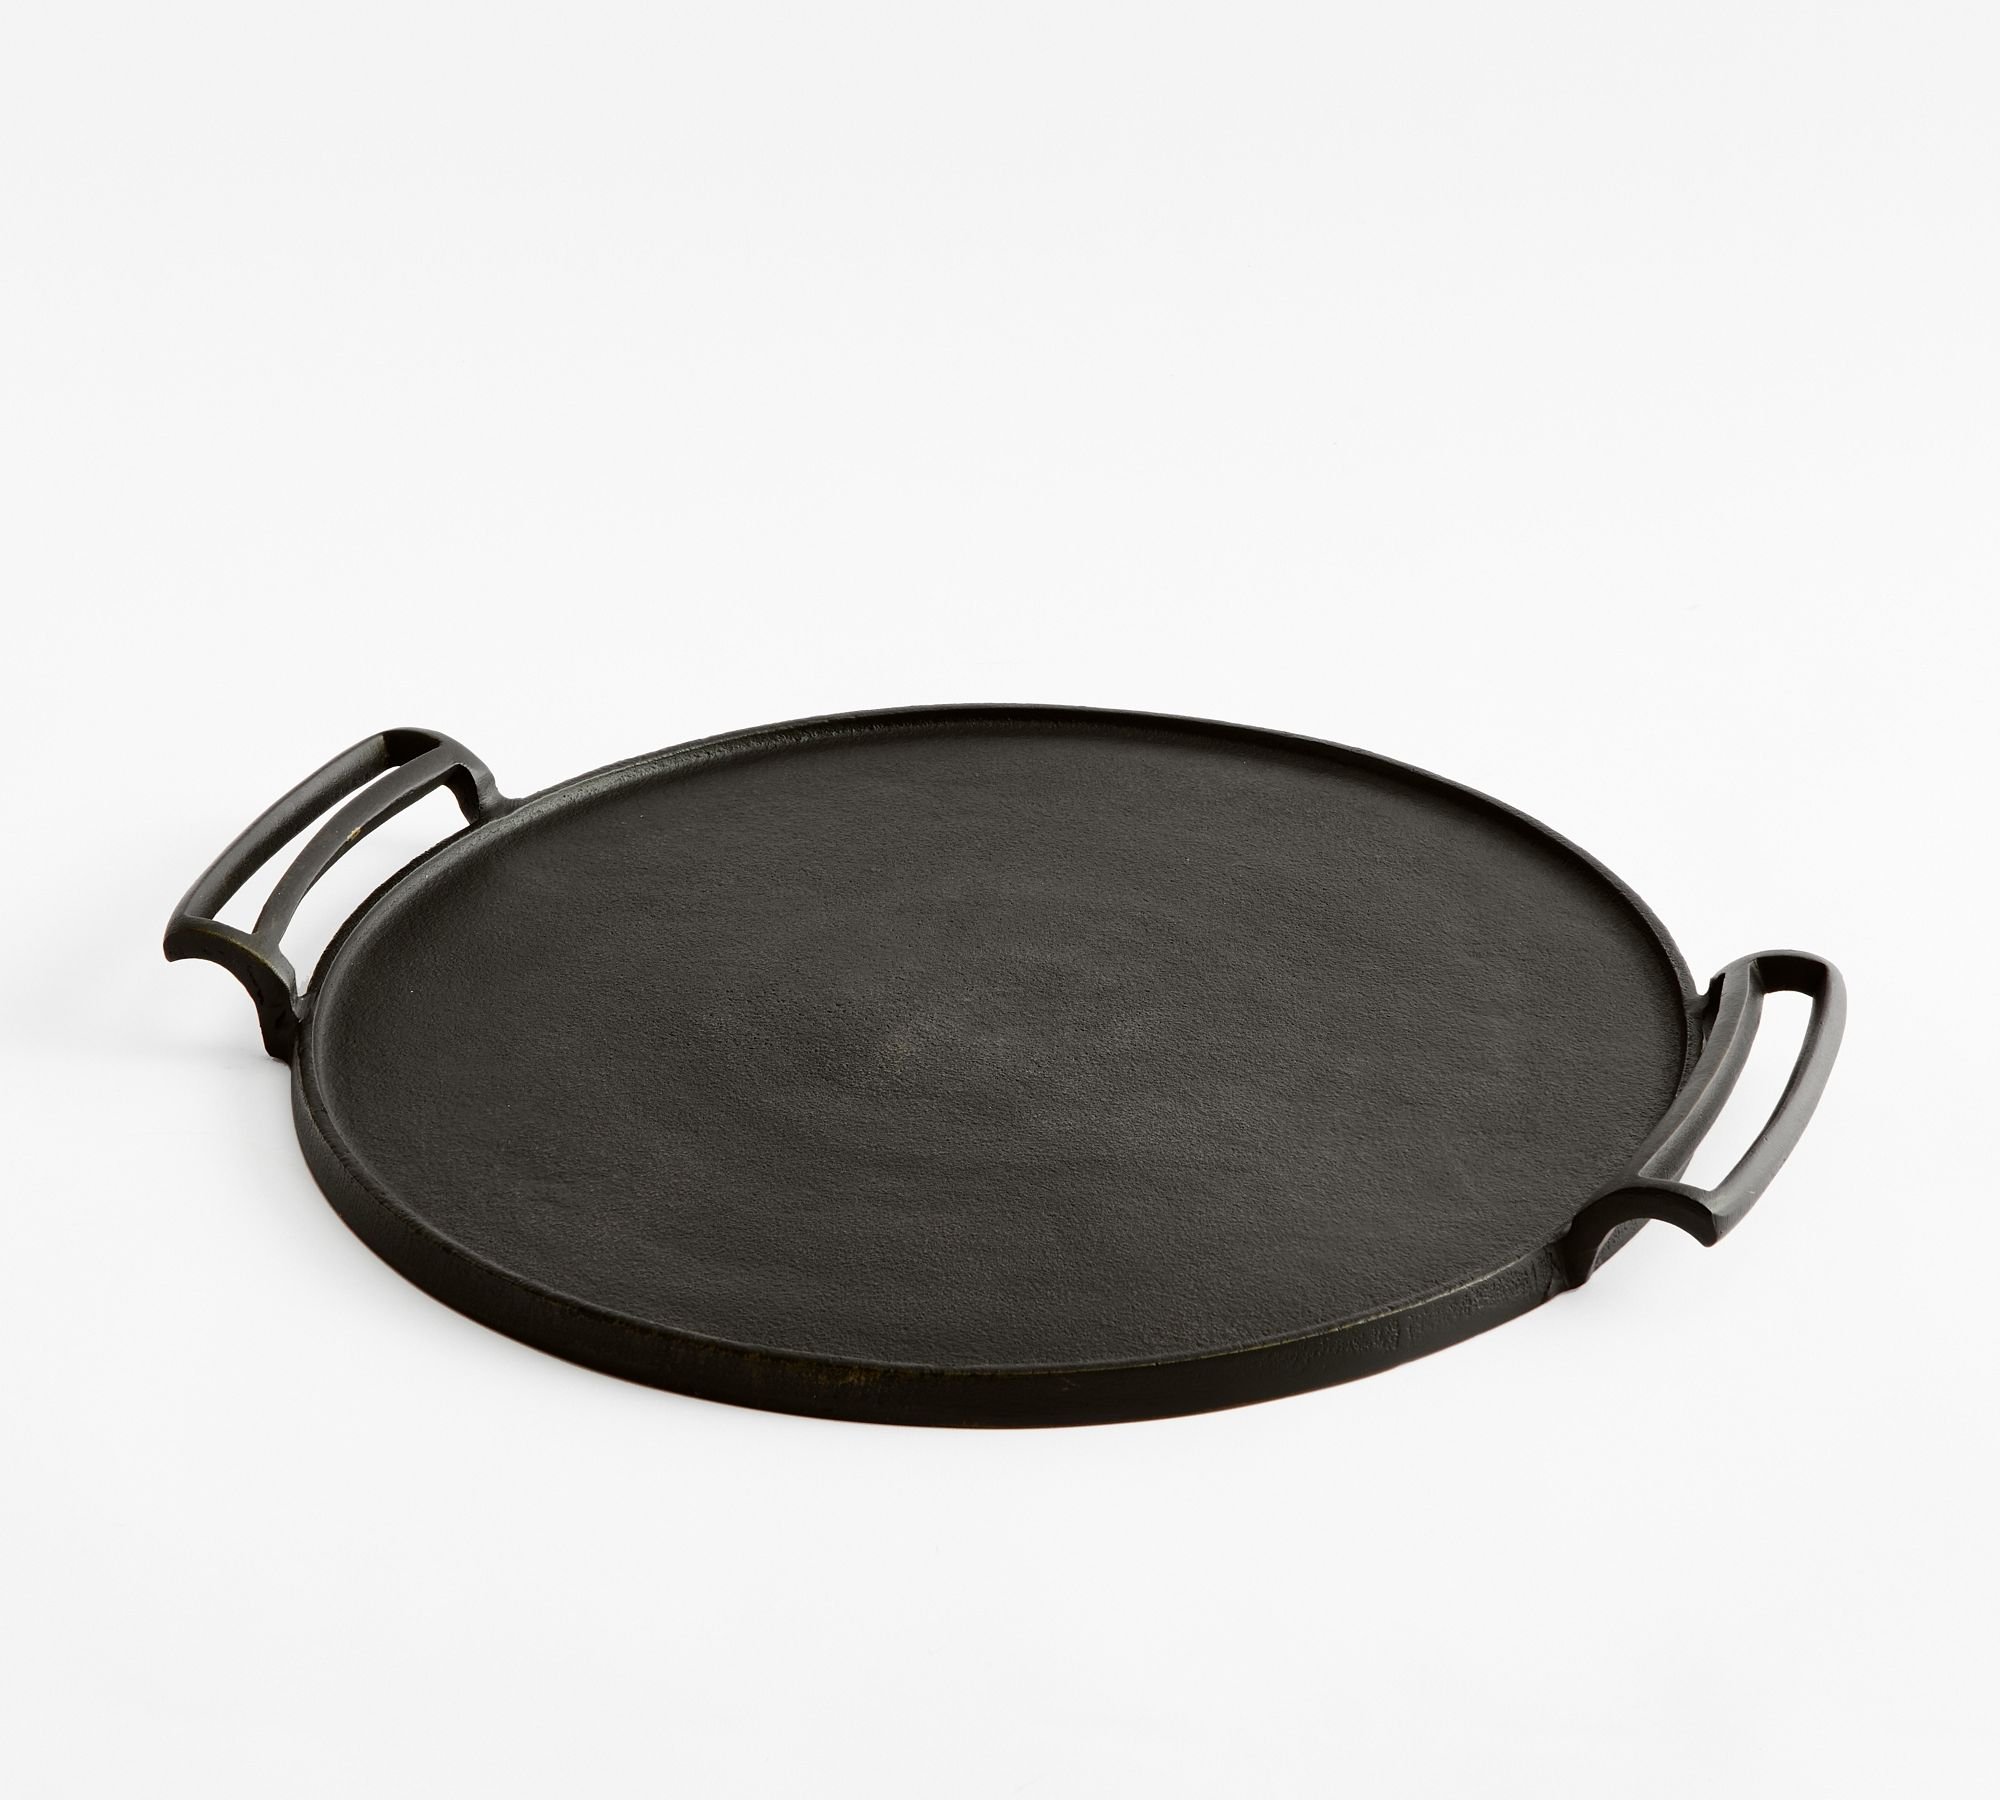 round cast iron serving tray.jpg